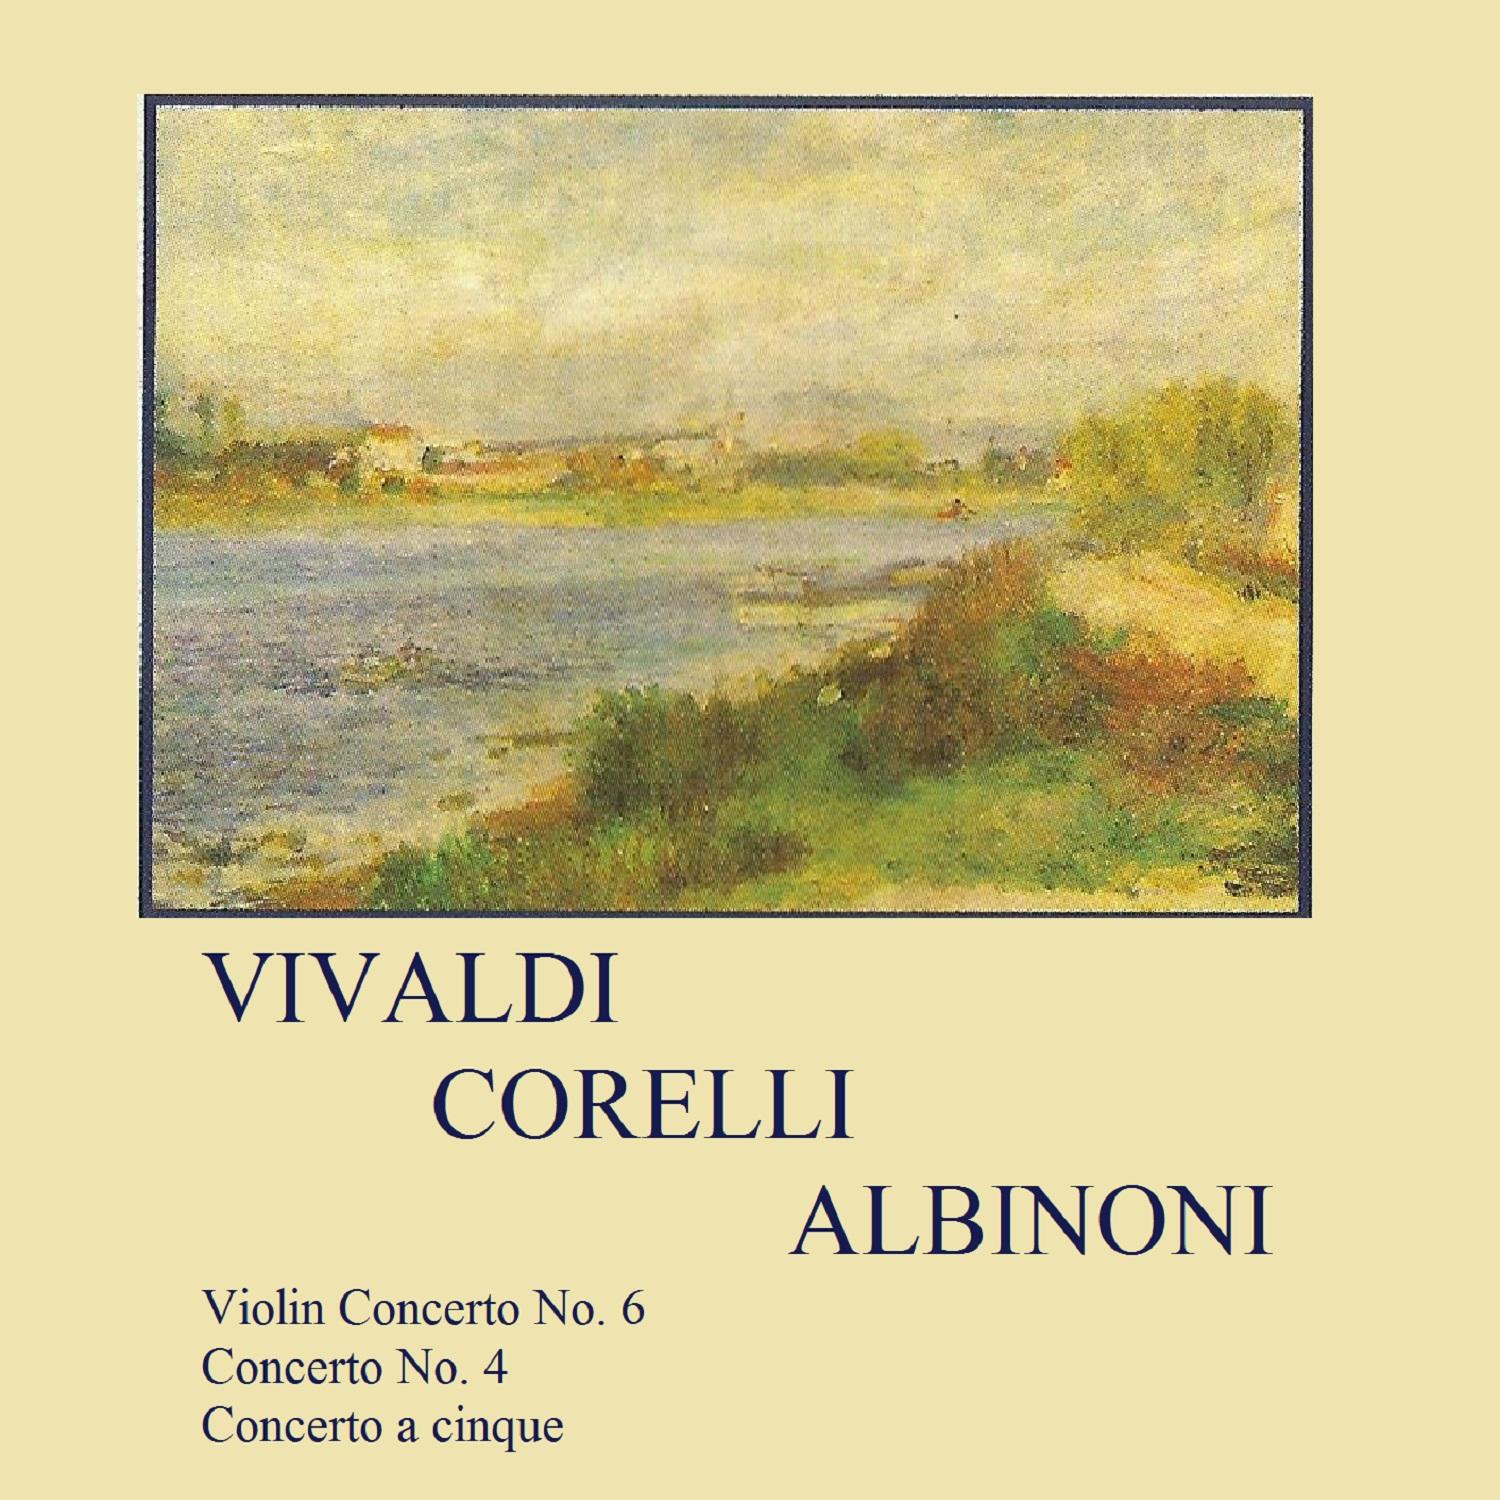 Vivaldi, Corelli, Albinoni, Violin Concerto No. 6, Concerto No. 4, Concerto a Cinque